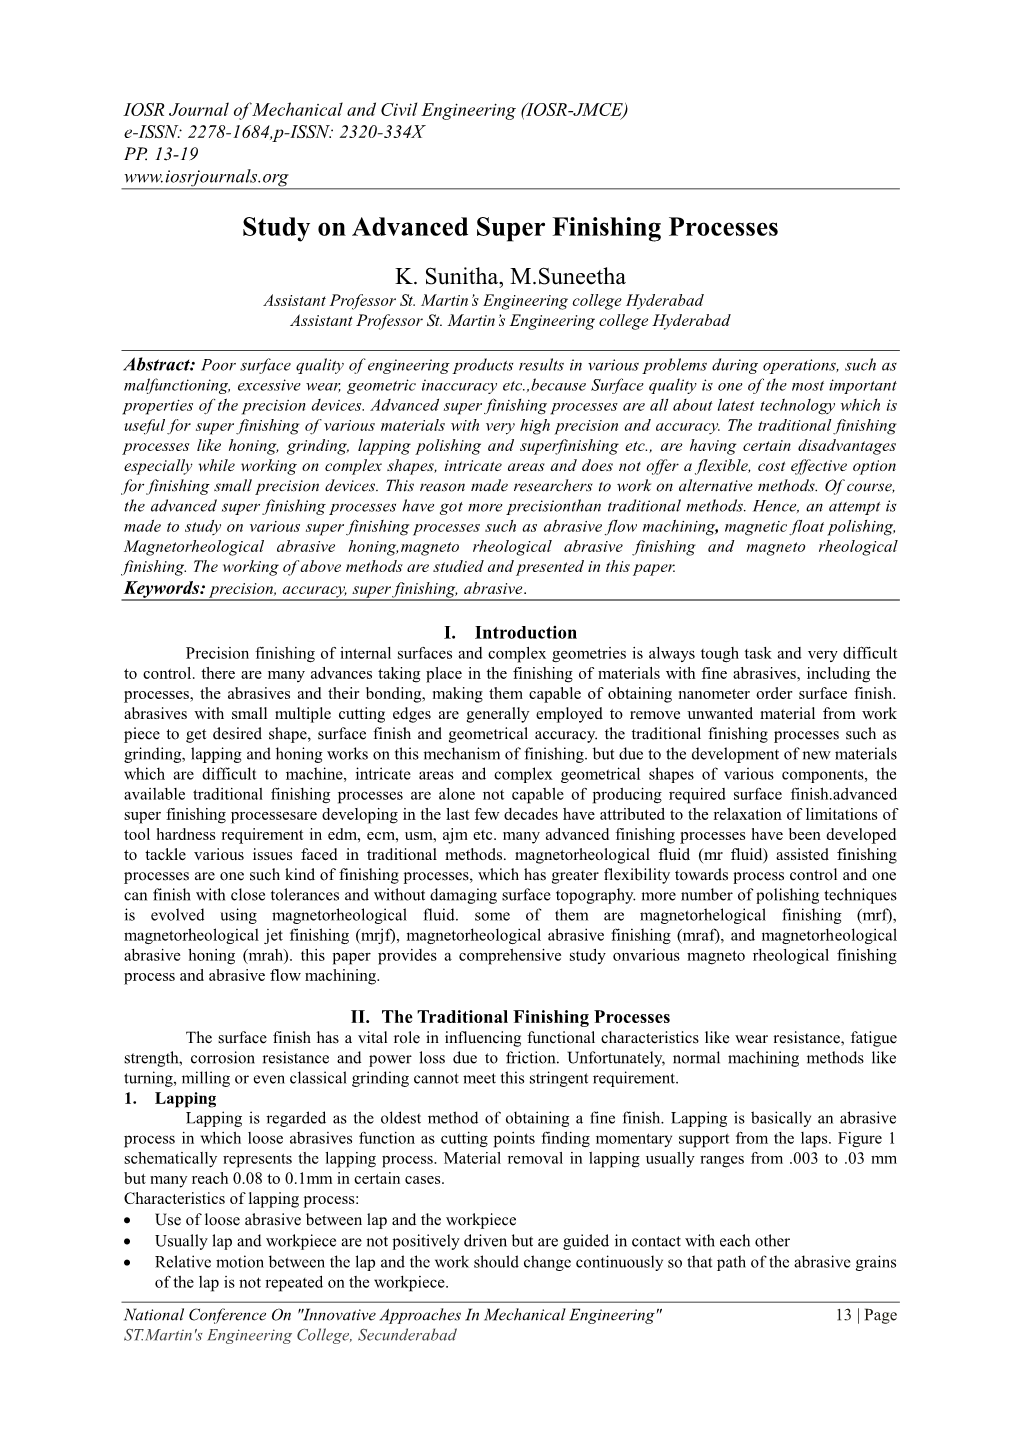 Study on Advanced Super Finishing Processes